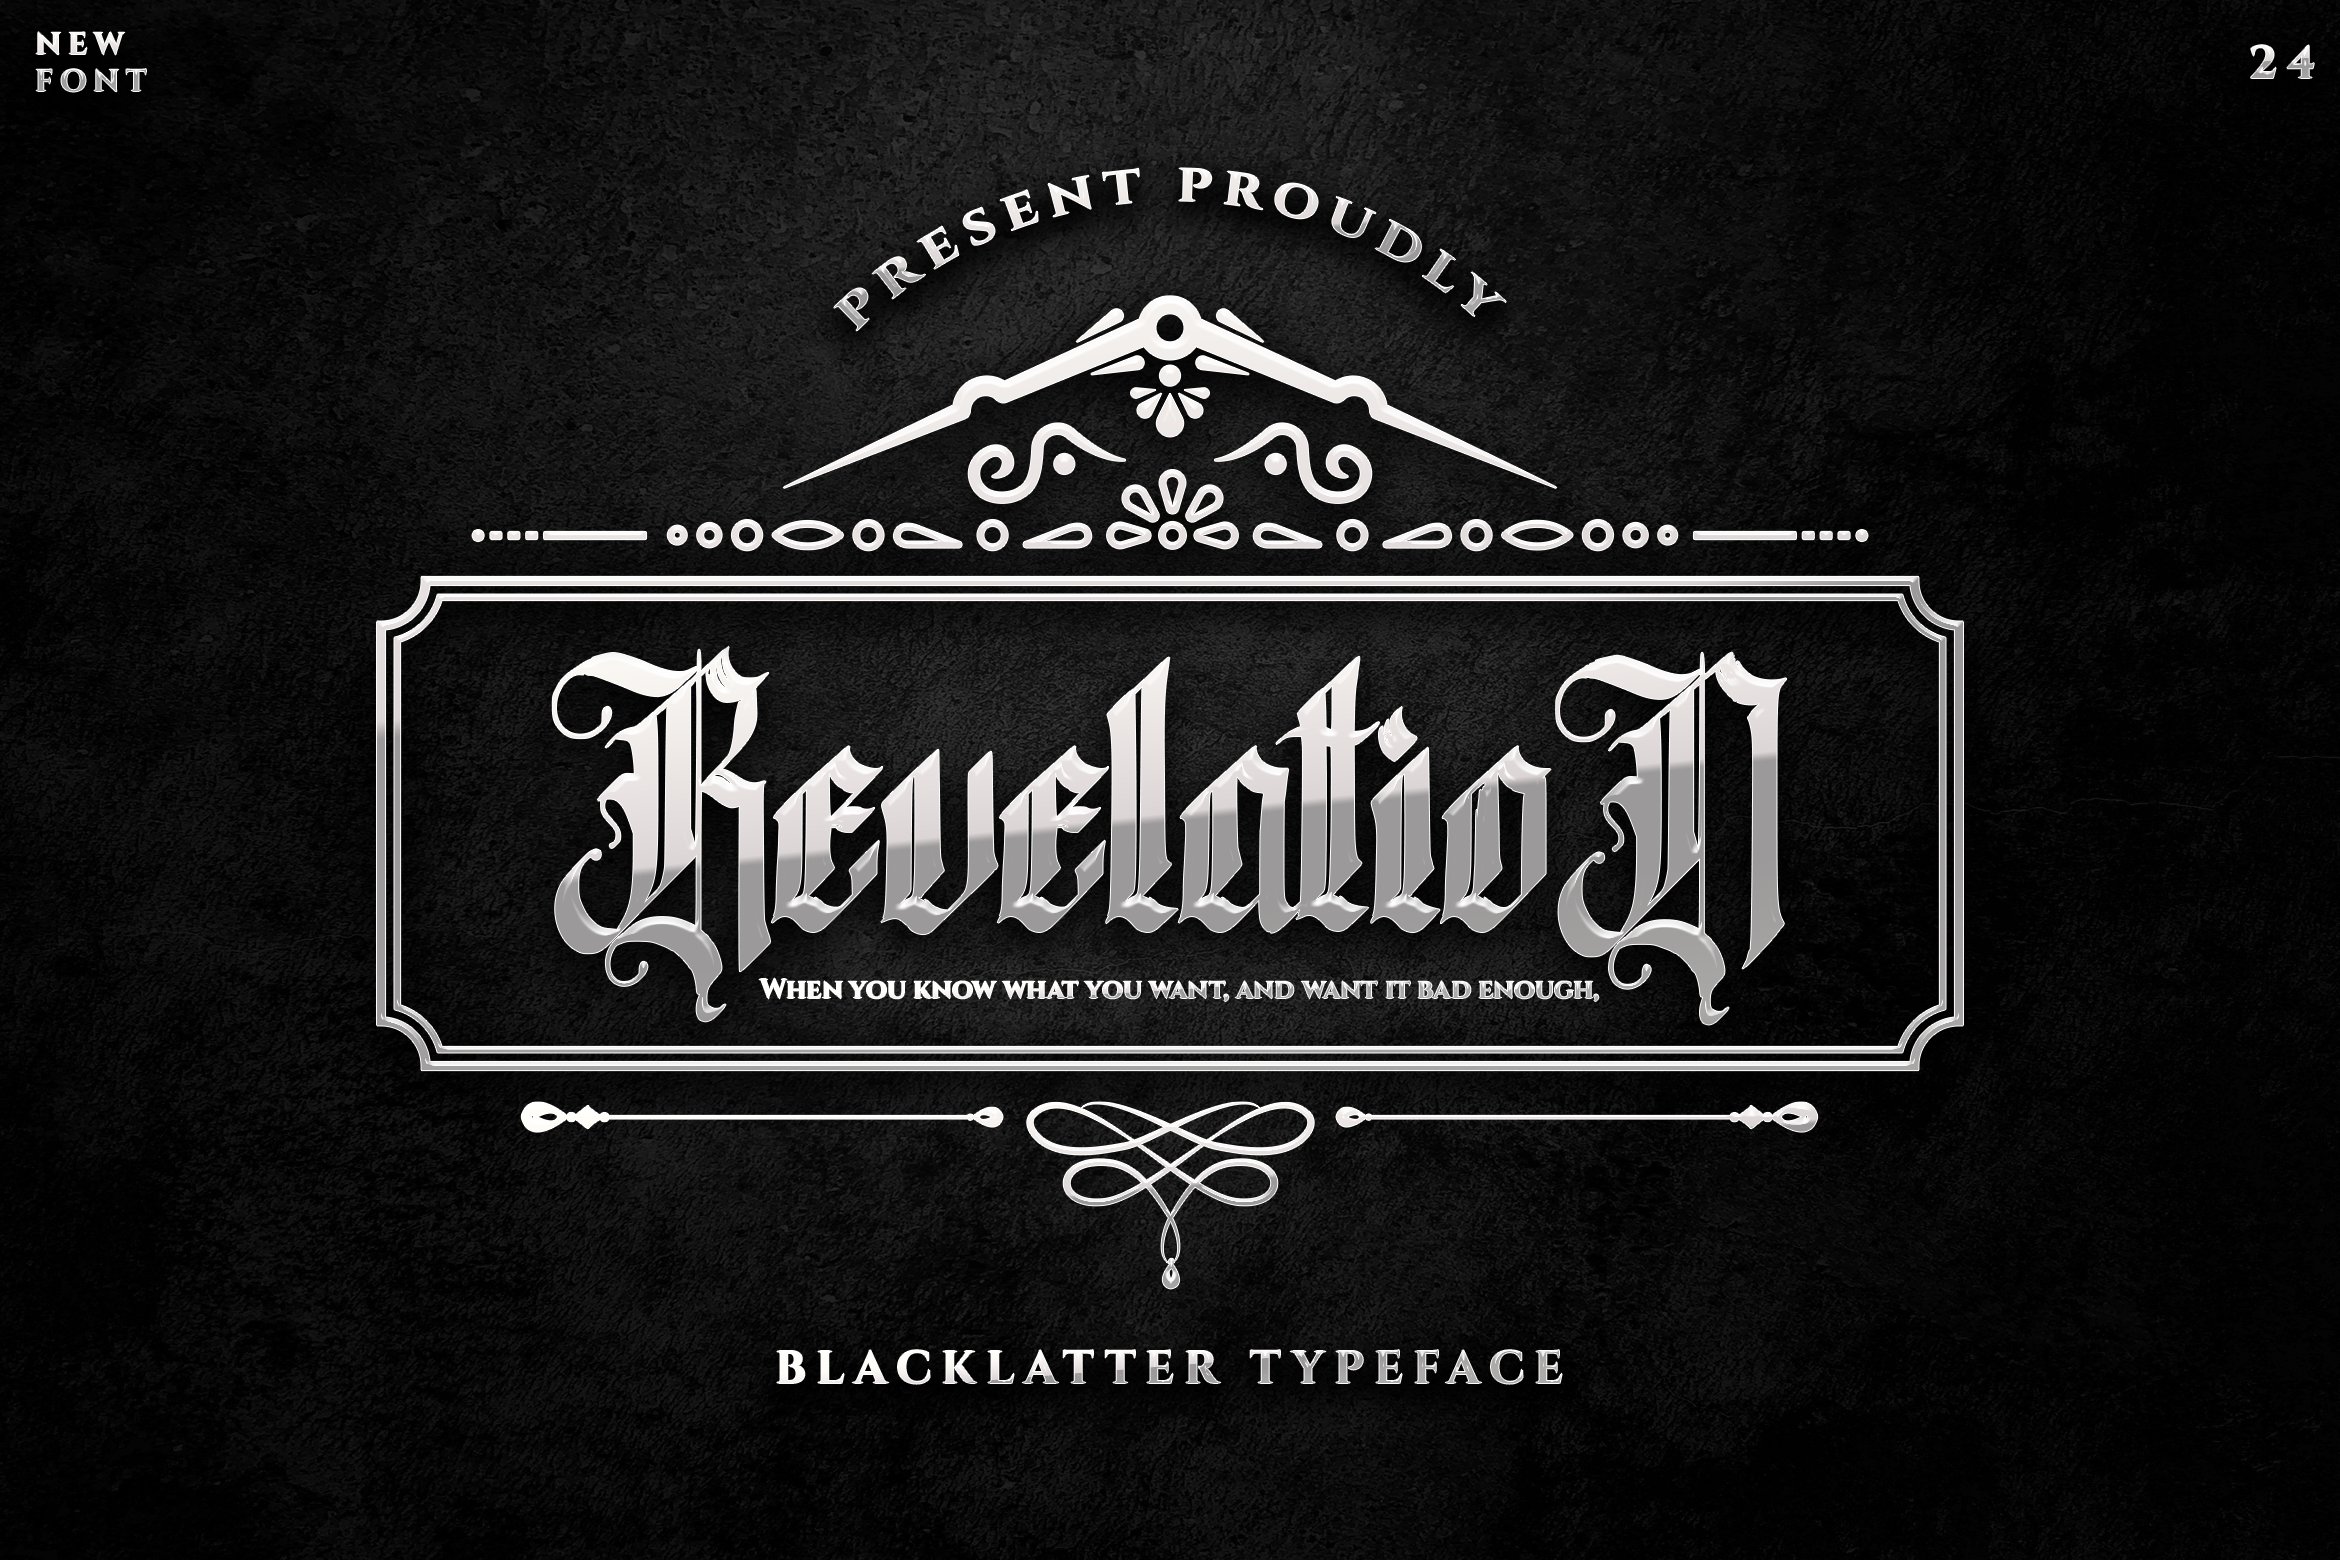 Revelation - Blackletter Typeface cover image.